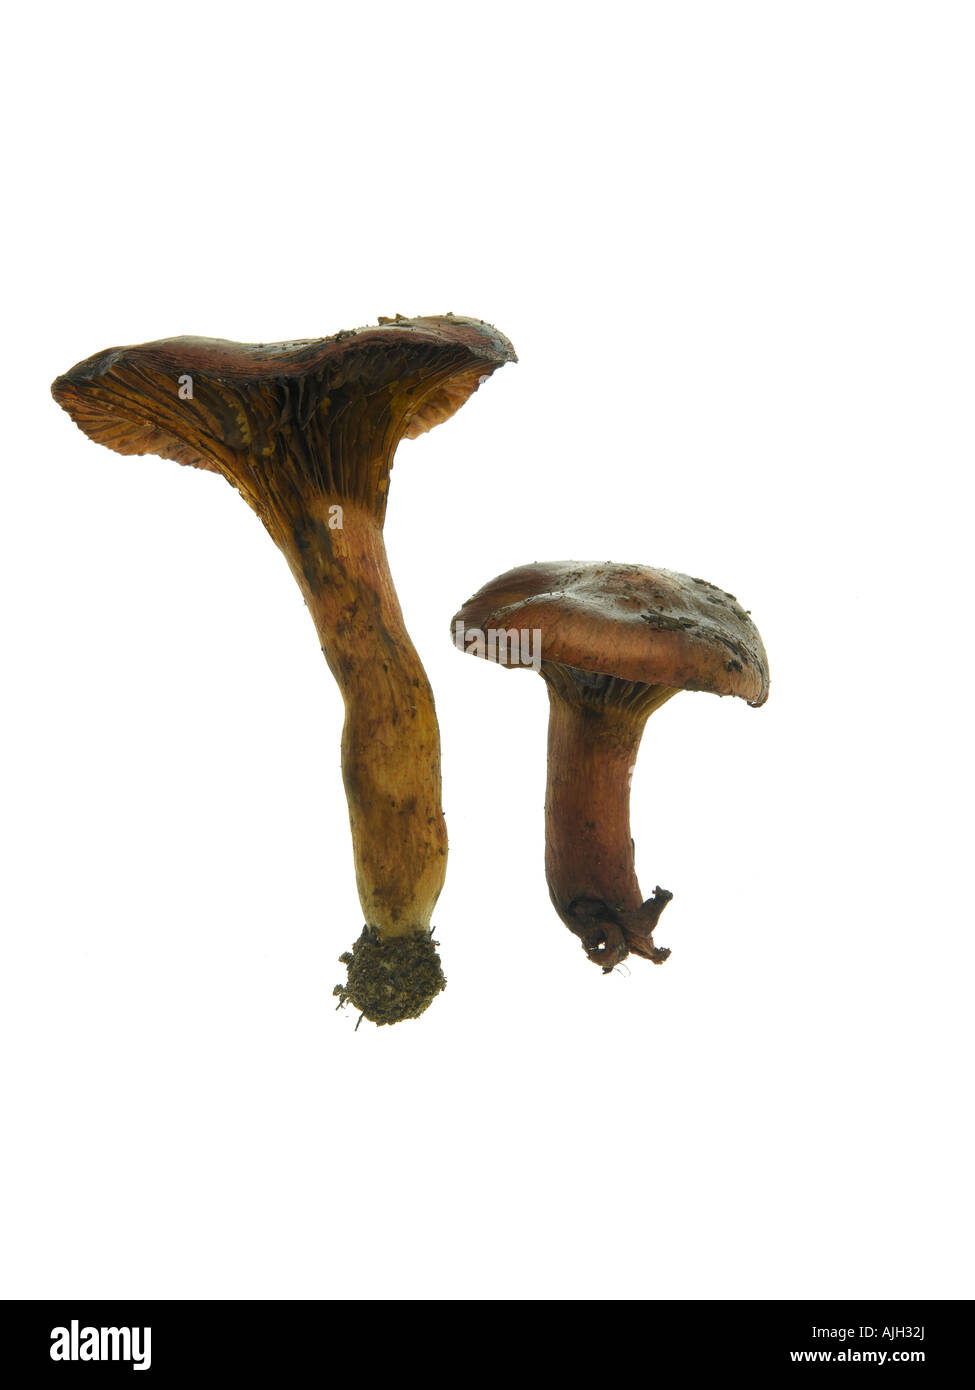 Copper Spike Mushroom Croogromphus rutilus Stock Photo